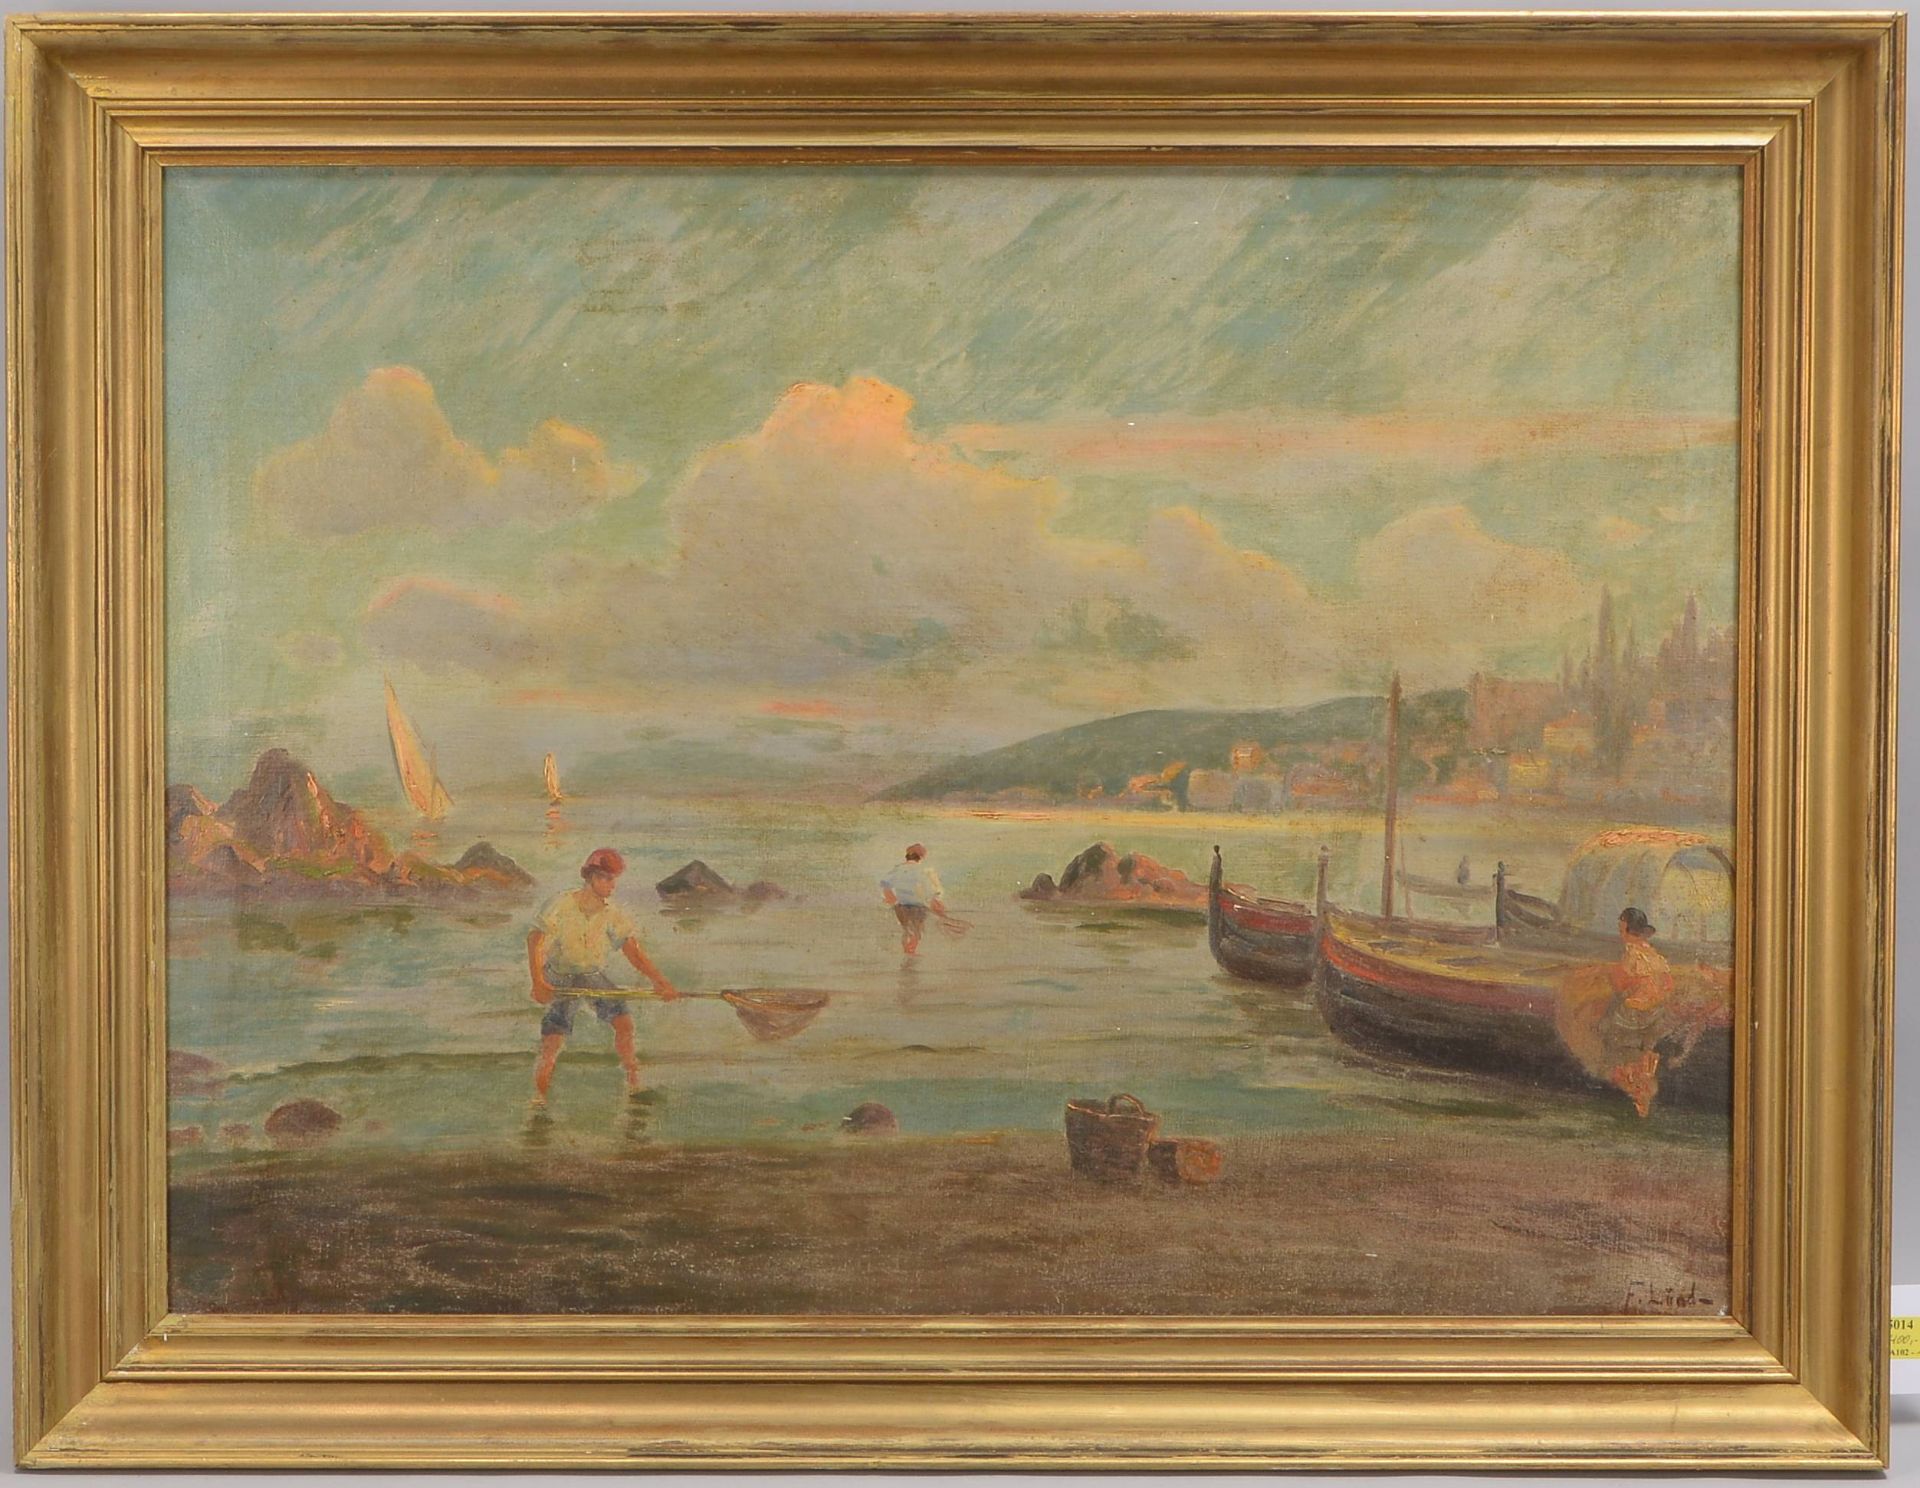 Lund, Frederik Christian (1826 - 1901, Kopenhagen; d&auml;nischer Historienmaler/Landschaftsmaler, s